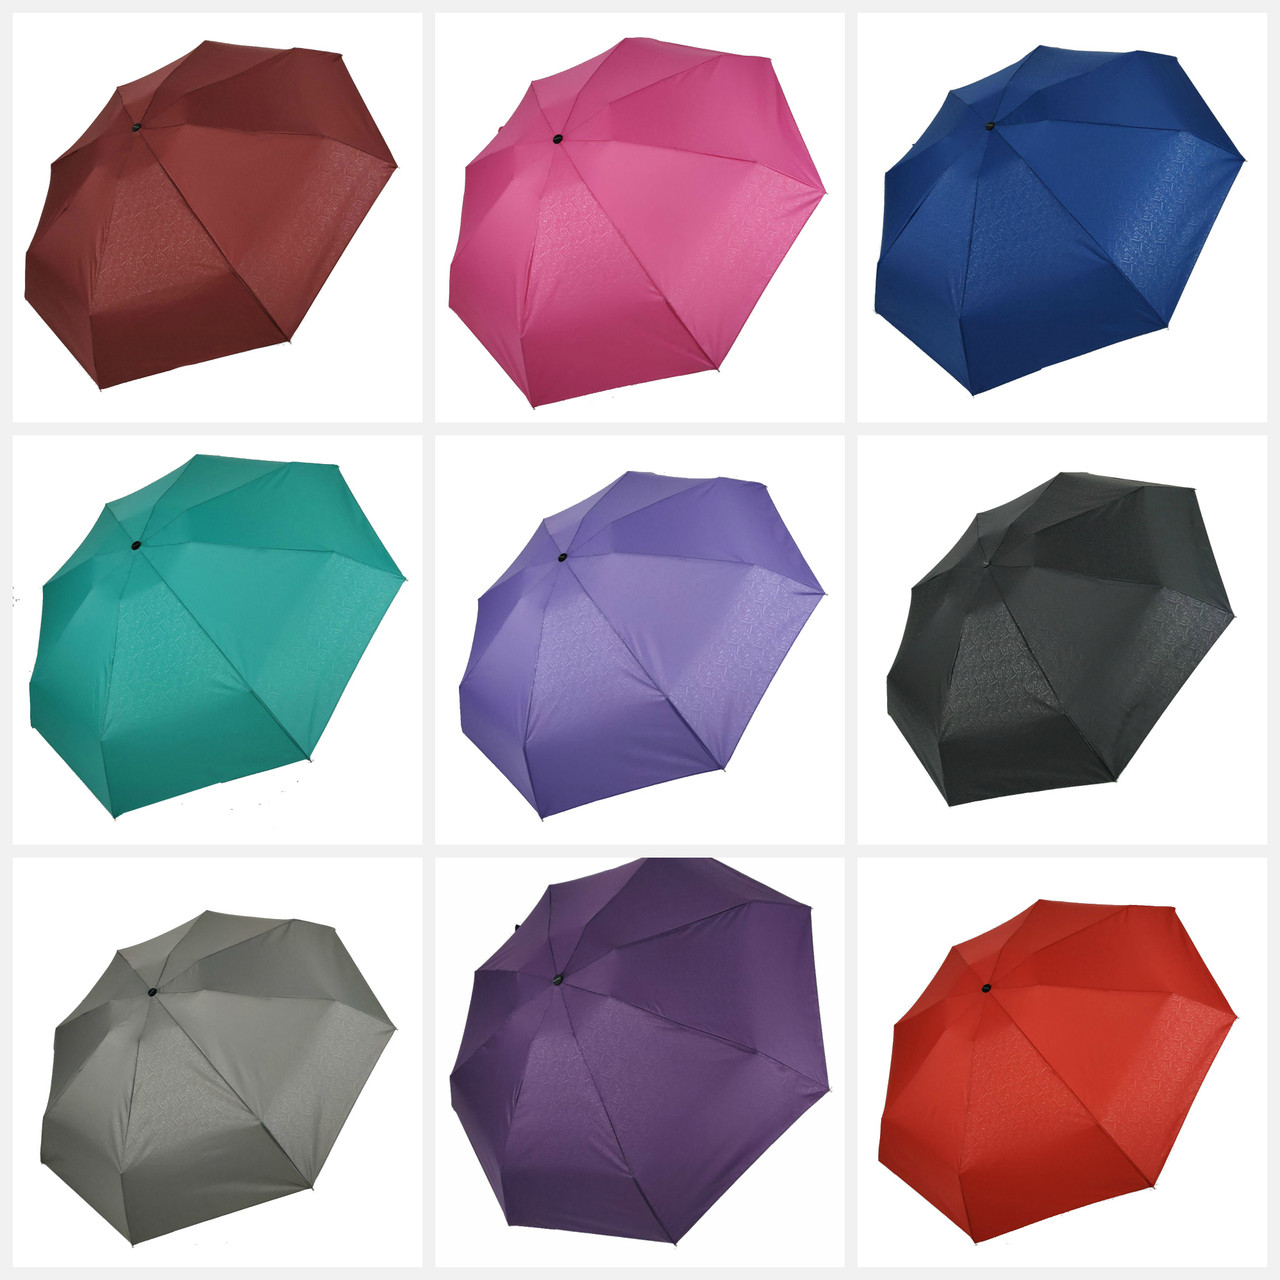 Оптом Жіноча механічна міні-парасоля Flagman-TheBest "Малютка" різні кольори, купол однтонный,504